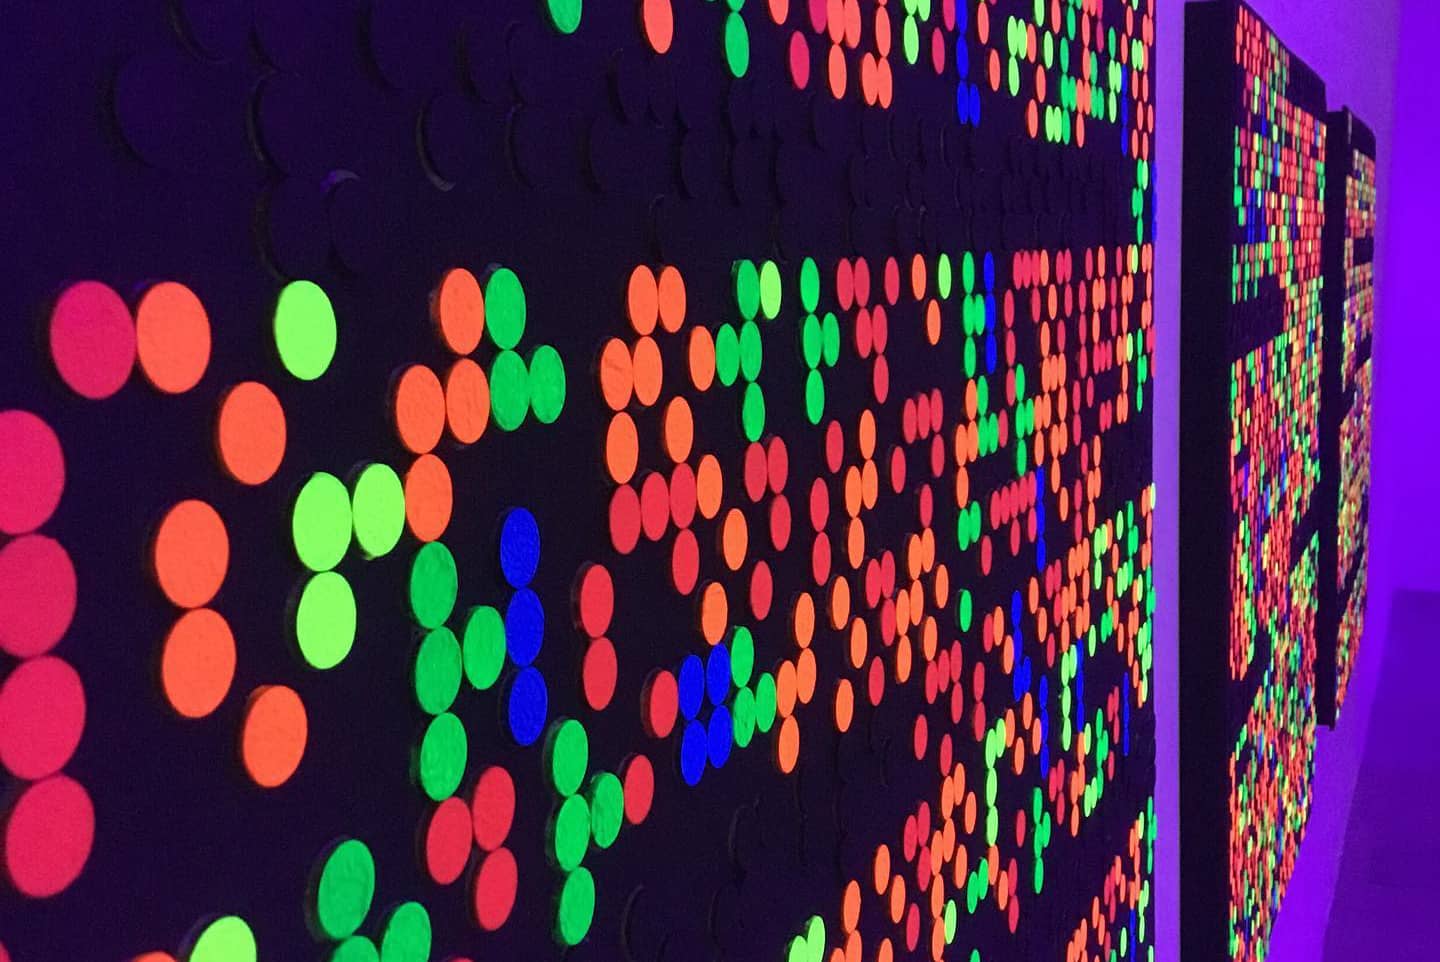 Artwork called neon dots by Clarke Reynolds